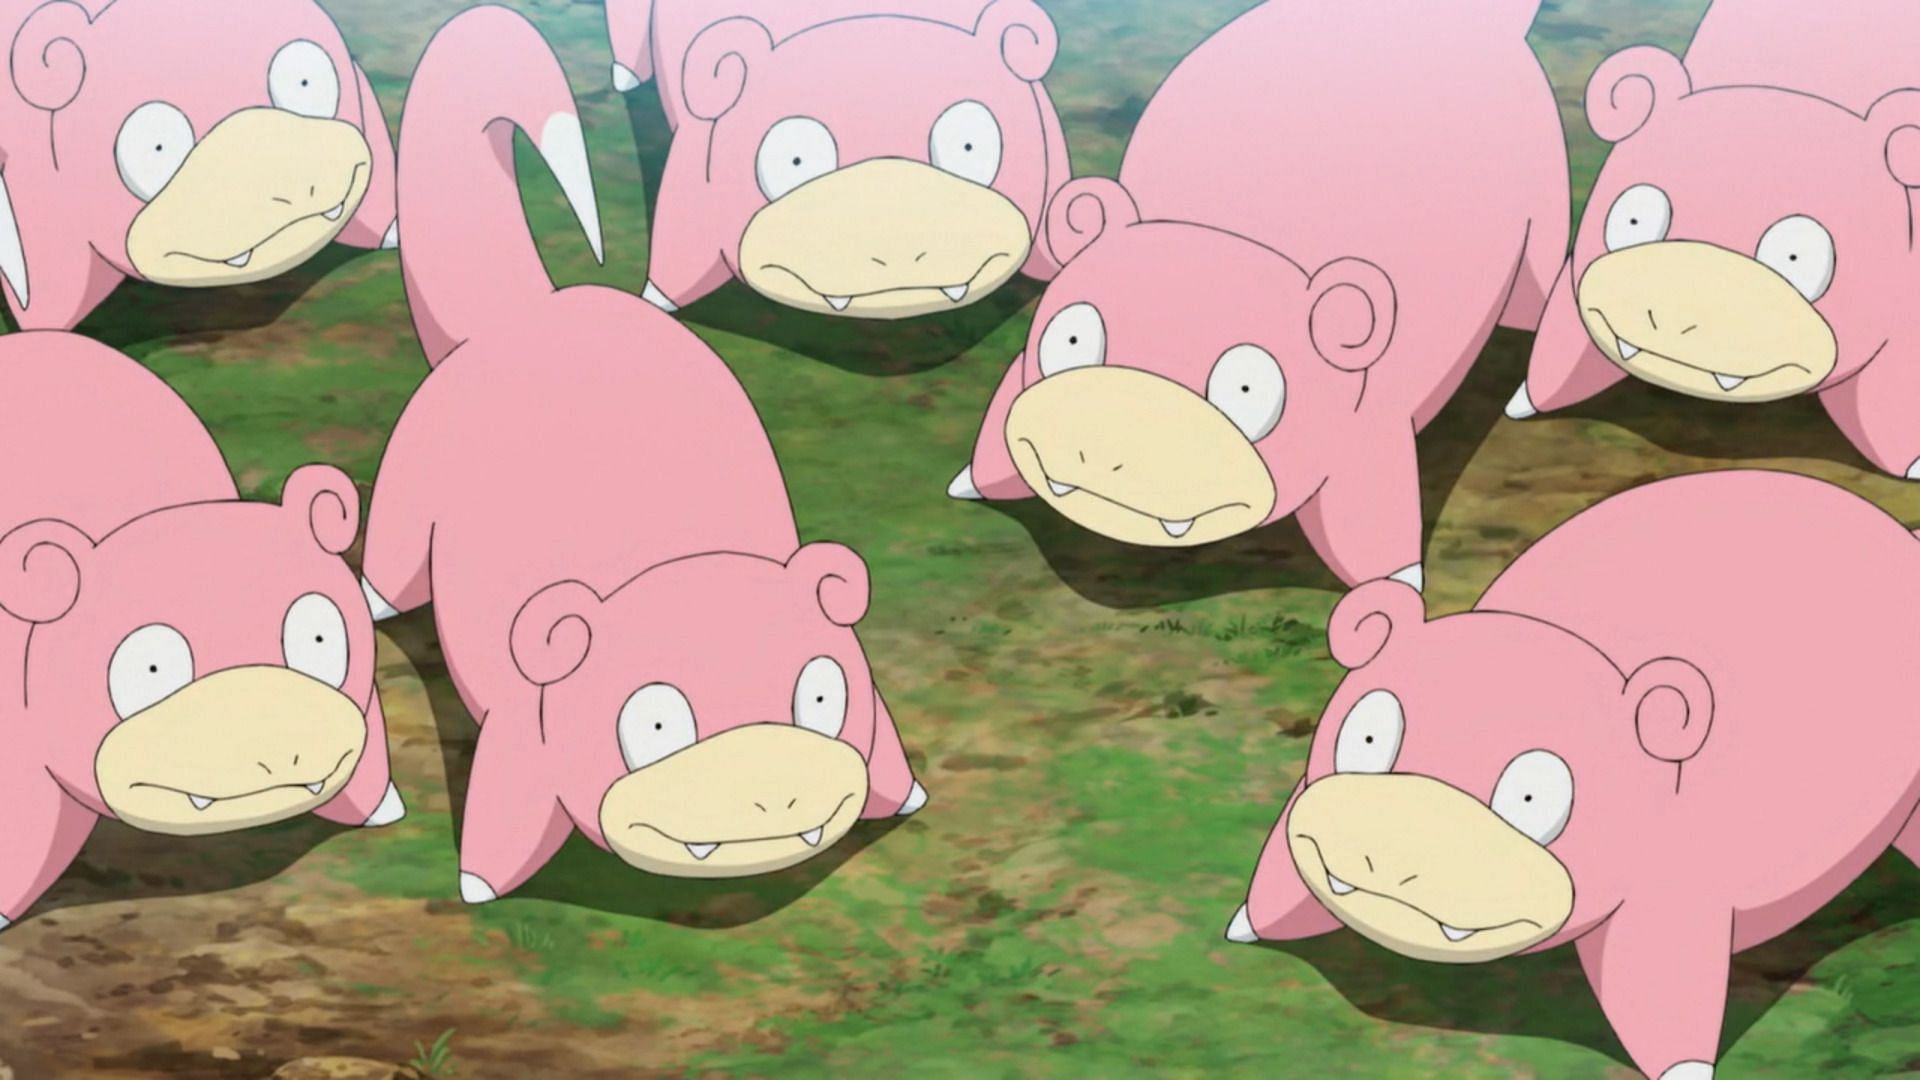 Slowpoke as it appears in the anime (Image via The Pokemon Company)